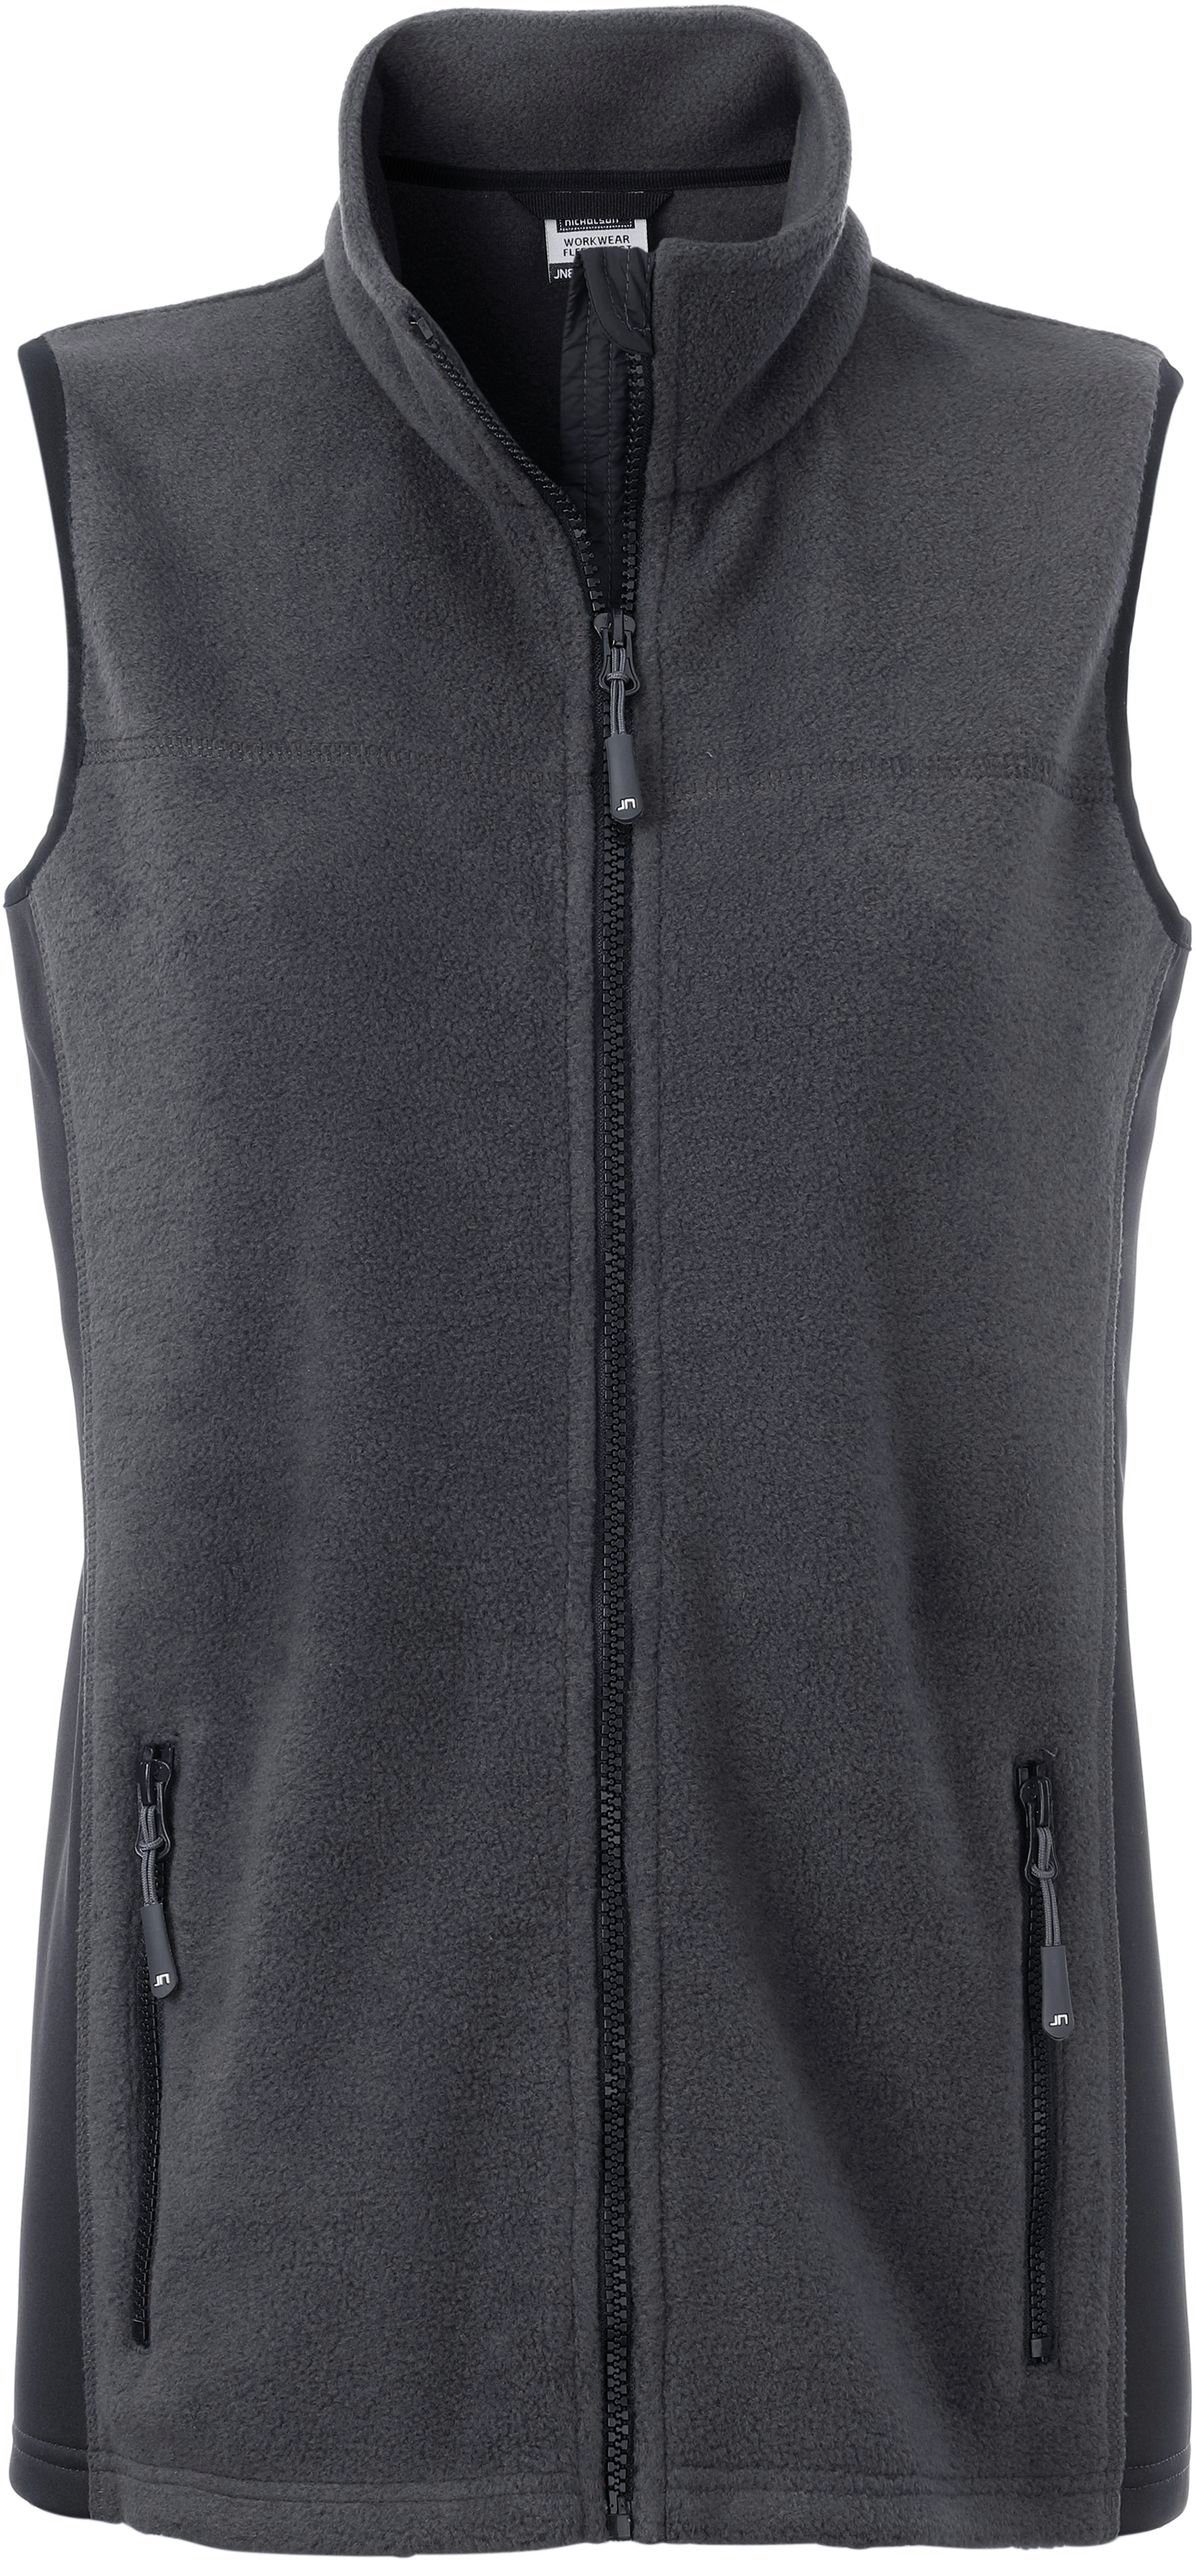 James & Nicholson Fleece FaS50855 Gilet Fleeceweste Weste Workwear carbon/black